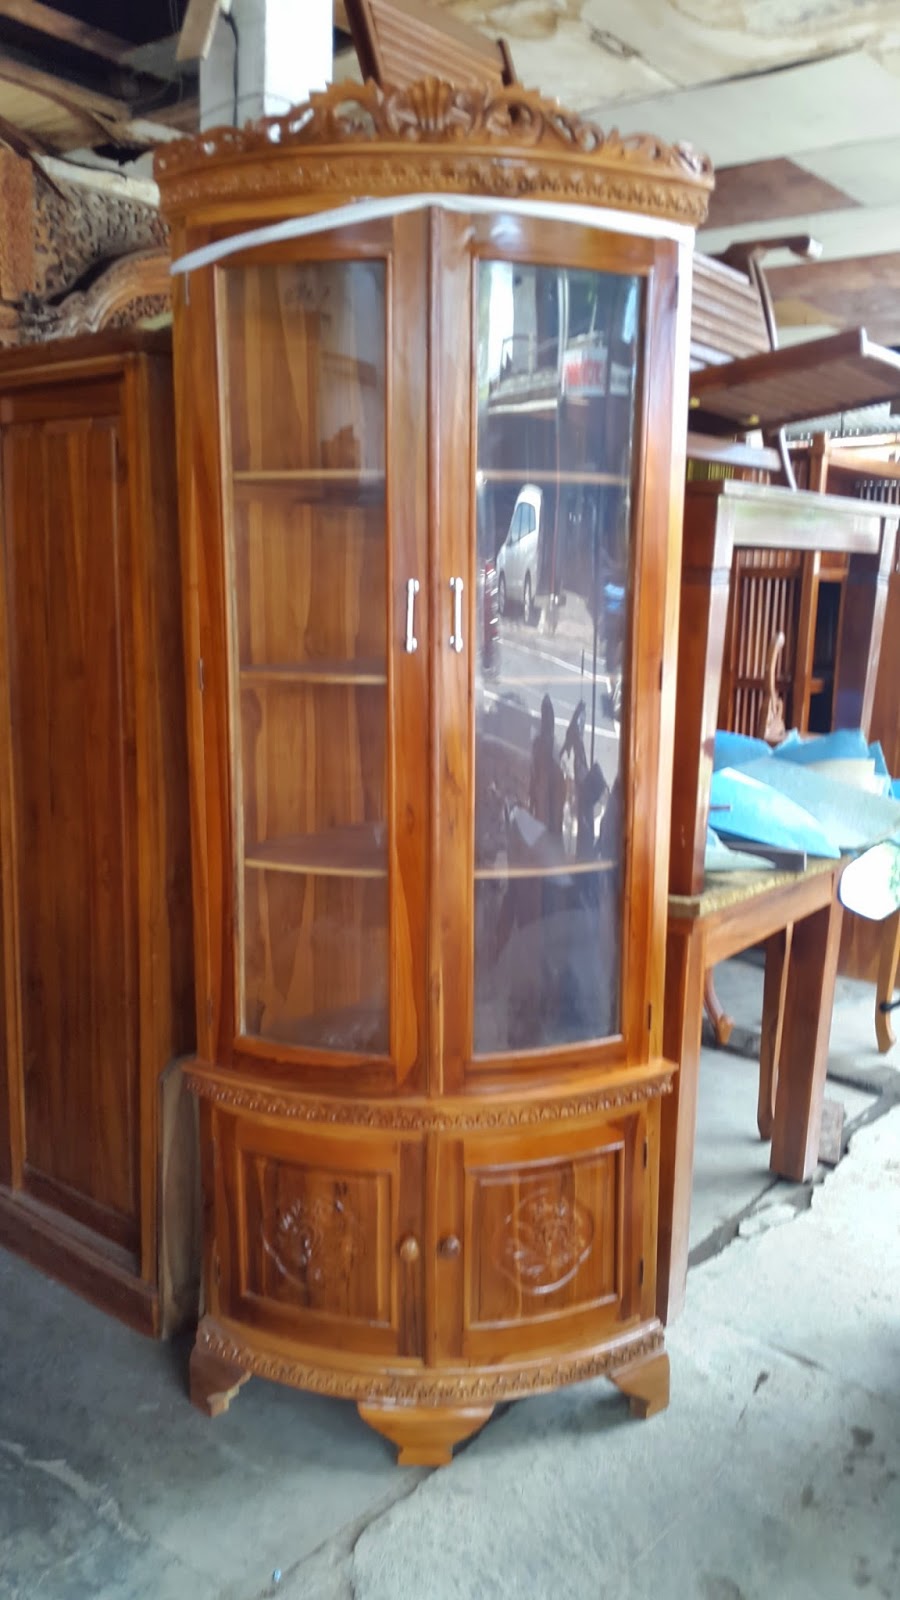 Angkasa Bali Furniture Distributor Kursi Meja Kantor Bali